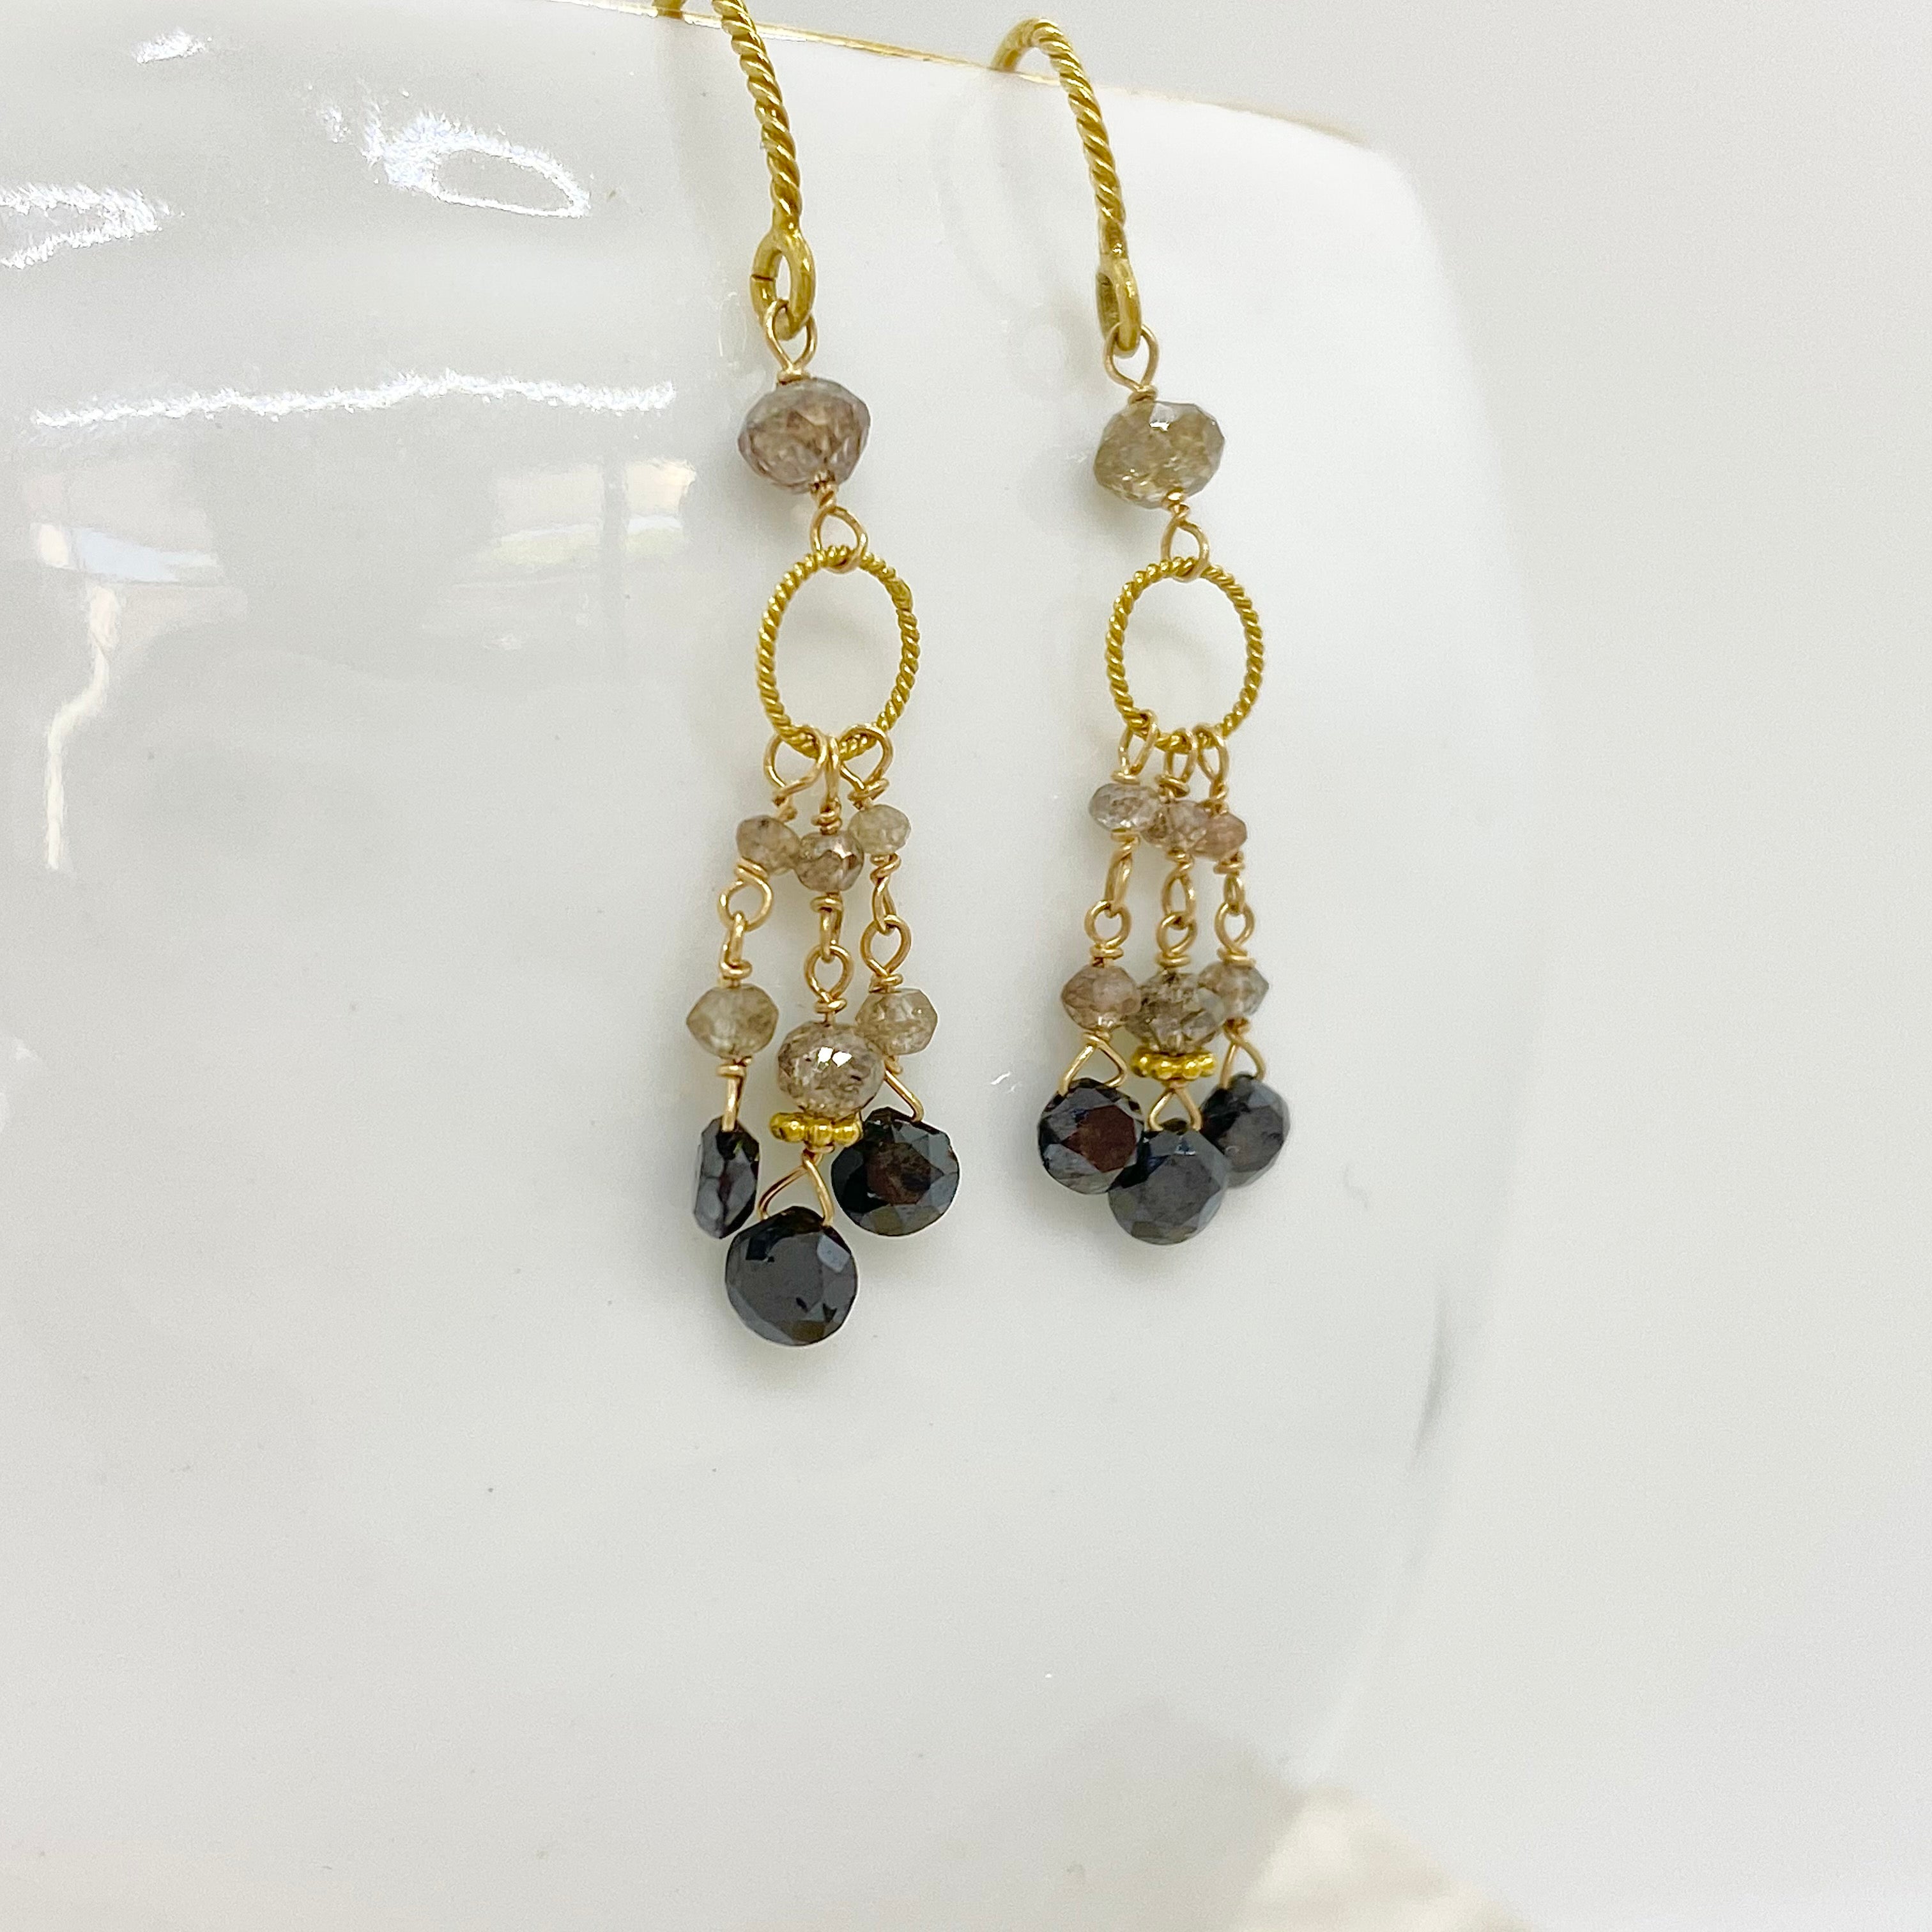 14k Gold Earrings w/ 18k Gold, Black Diamonds & Champagne Diamonds